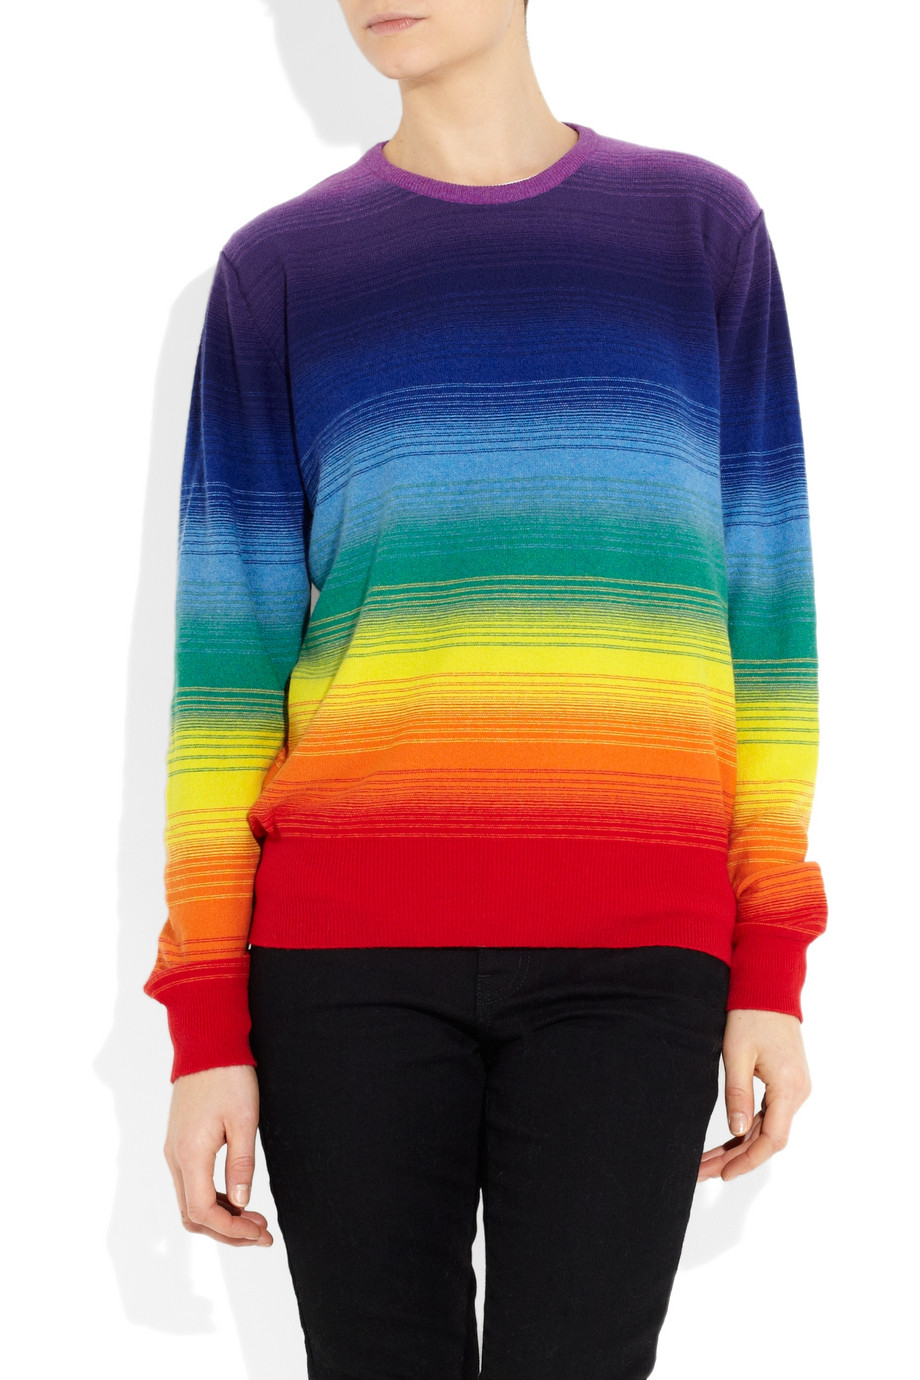 Christopher Kane Rainbow Cashmere Sweater - Lyst